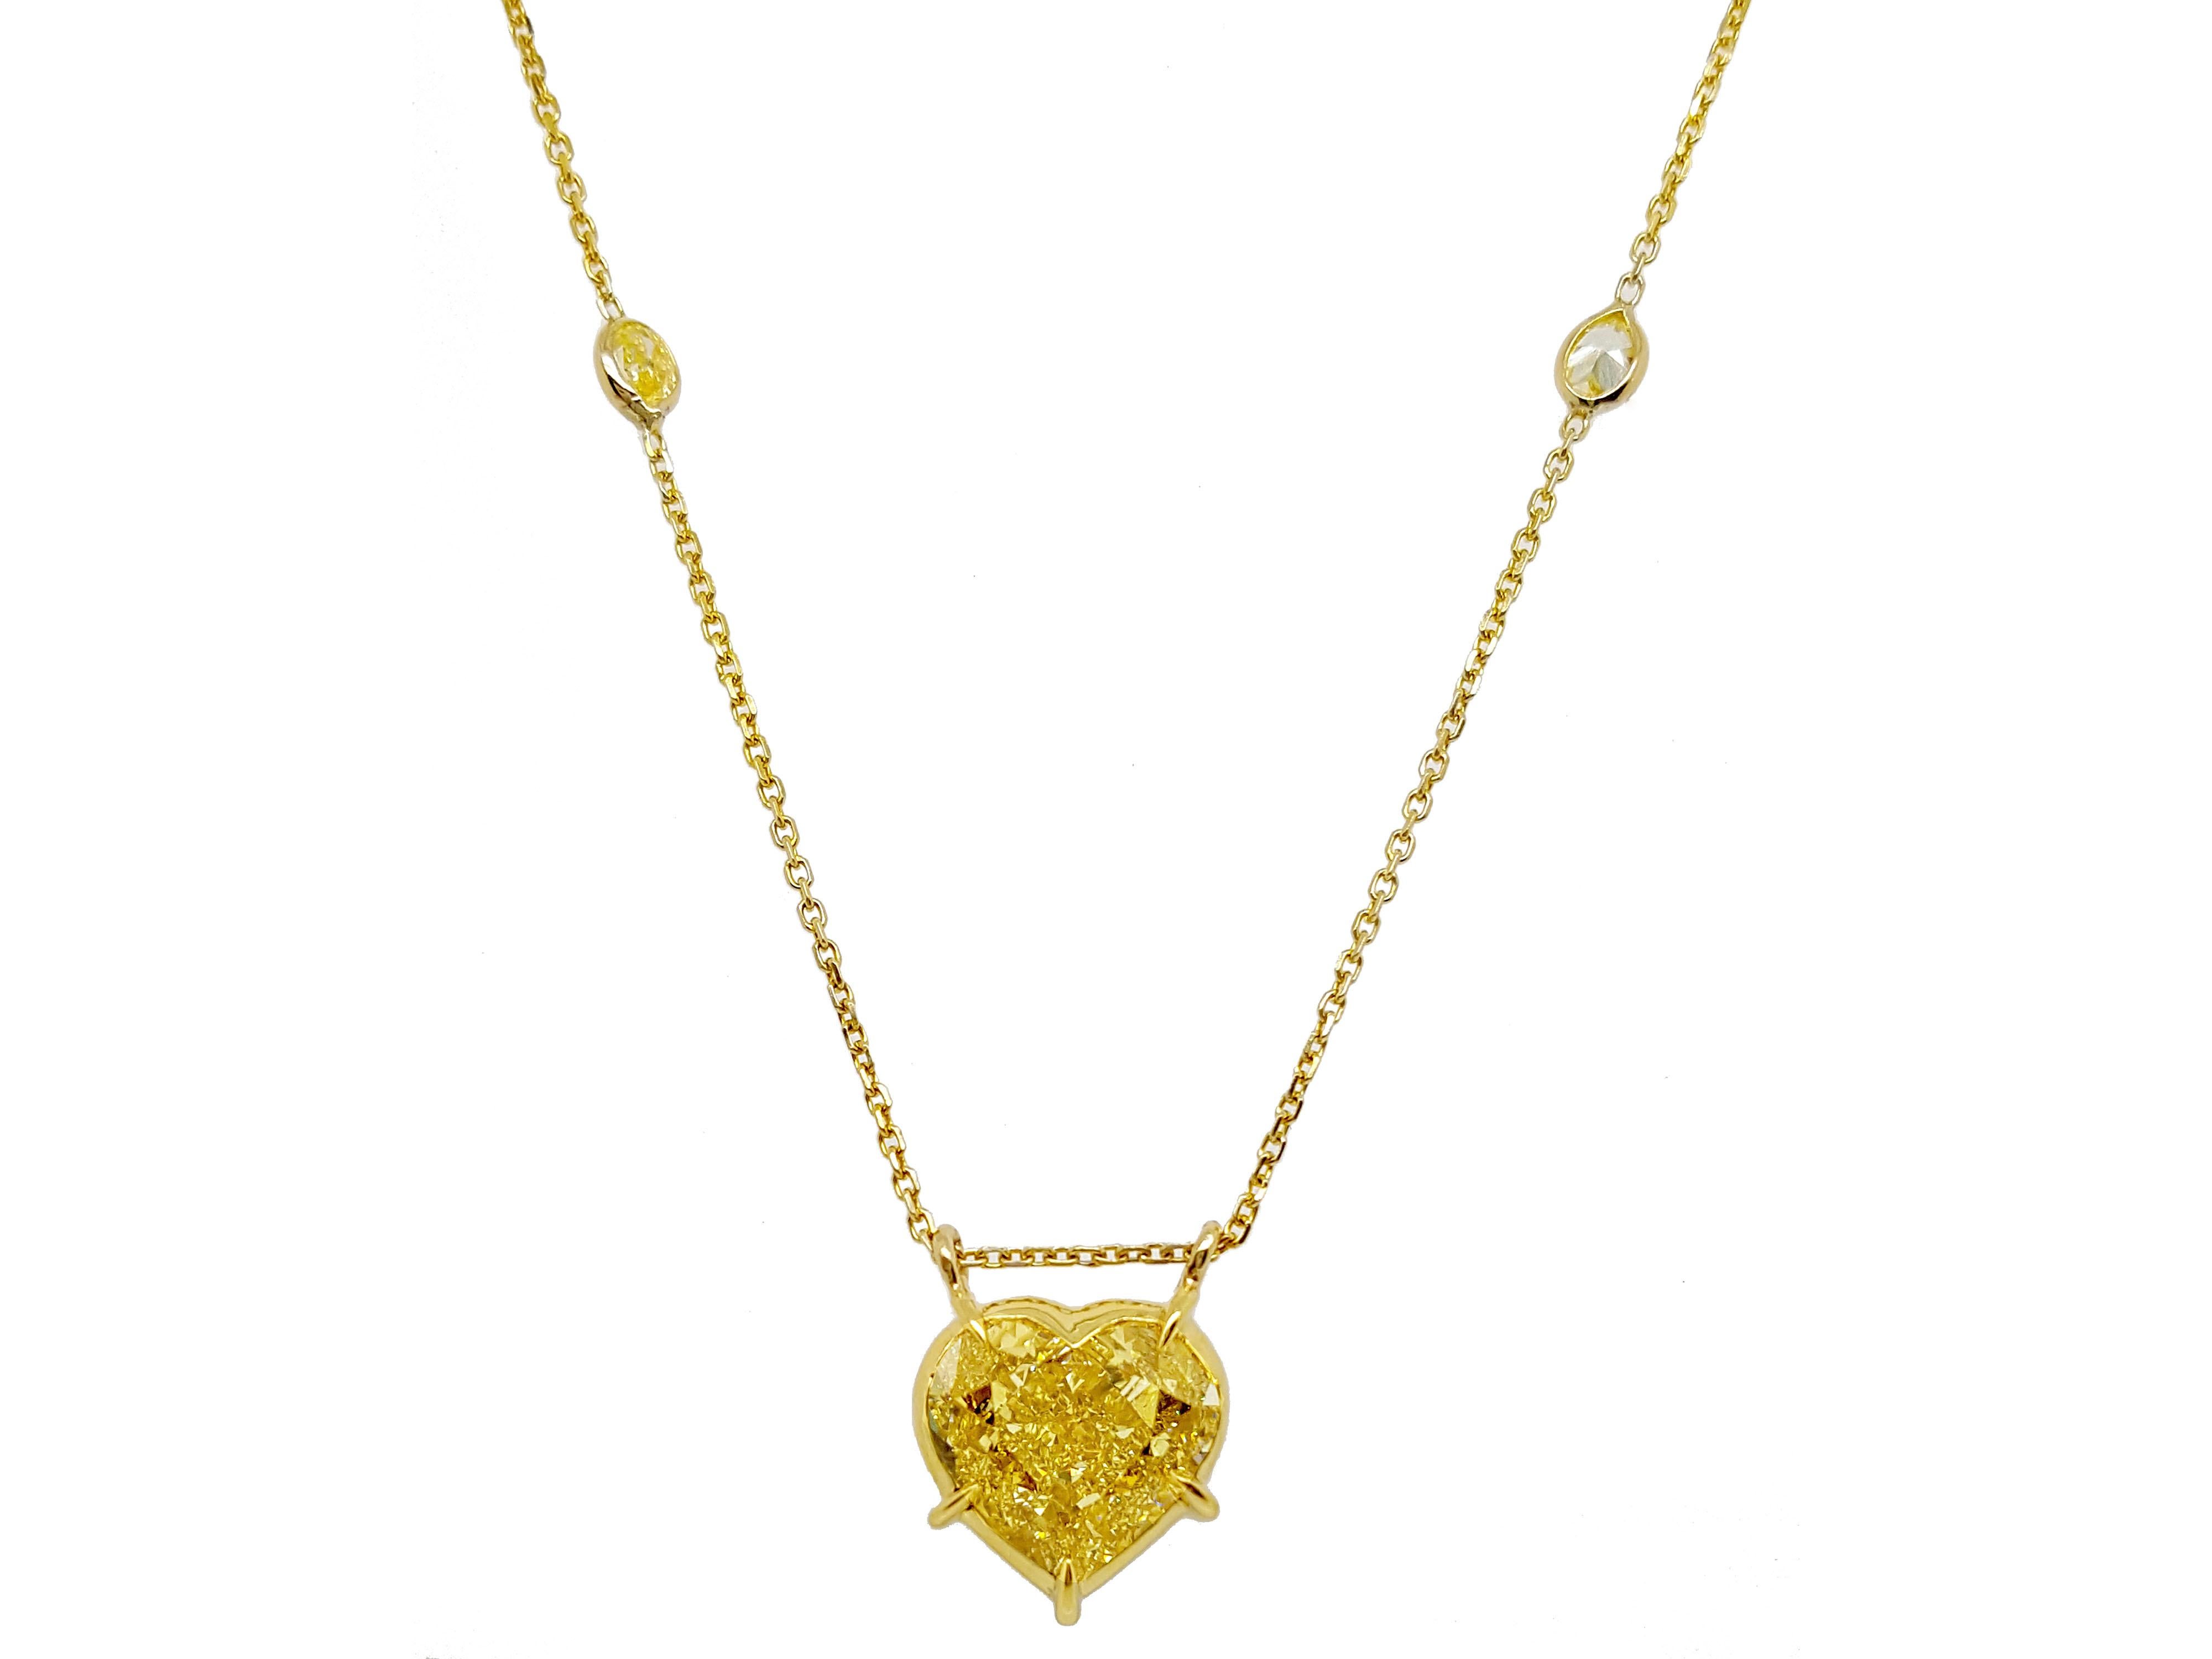 Heart Cut 5 Carat Fancy Yellow Diamond Heart-Shaped Necklace 18K Yellow Gold GIA Certified For Sale